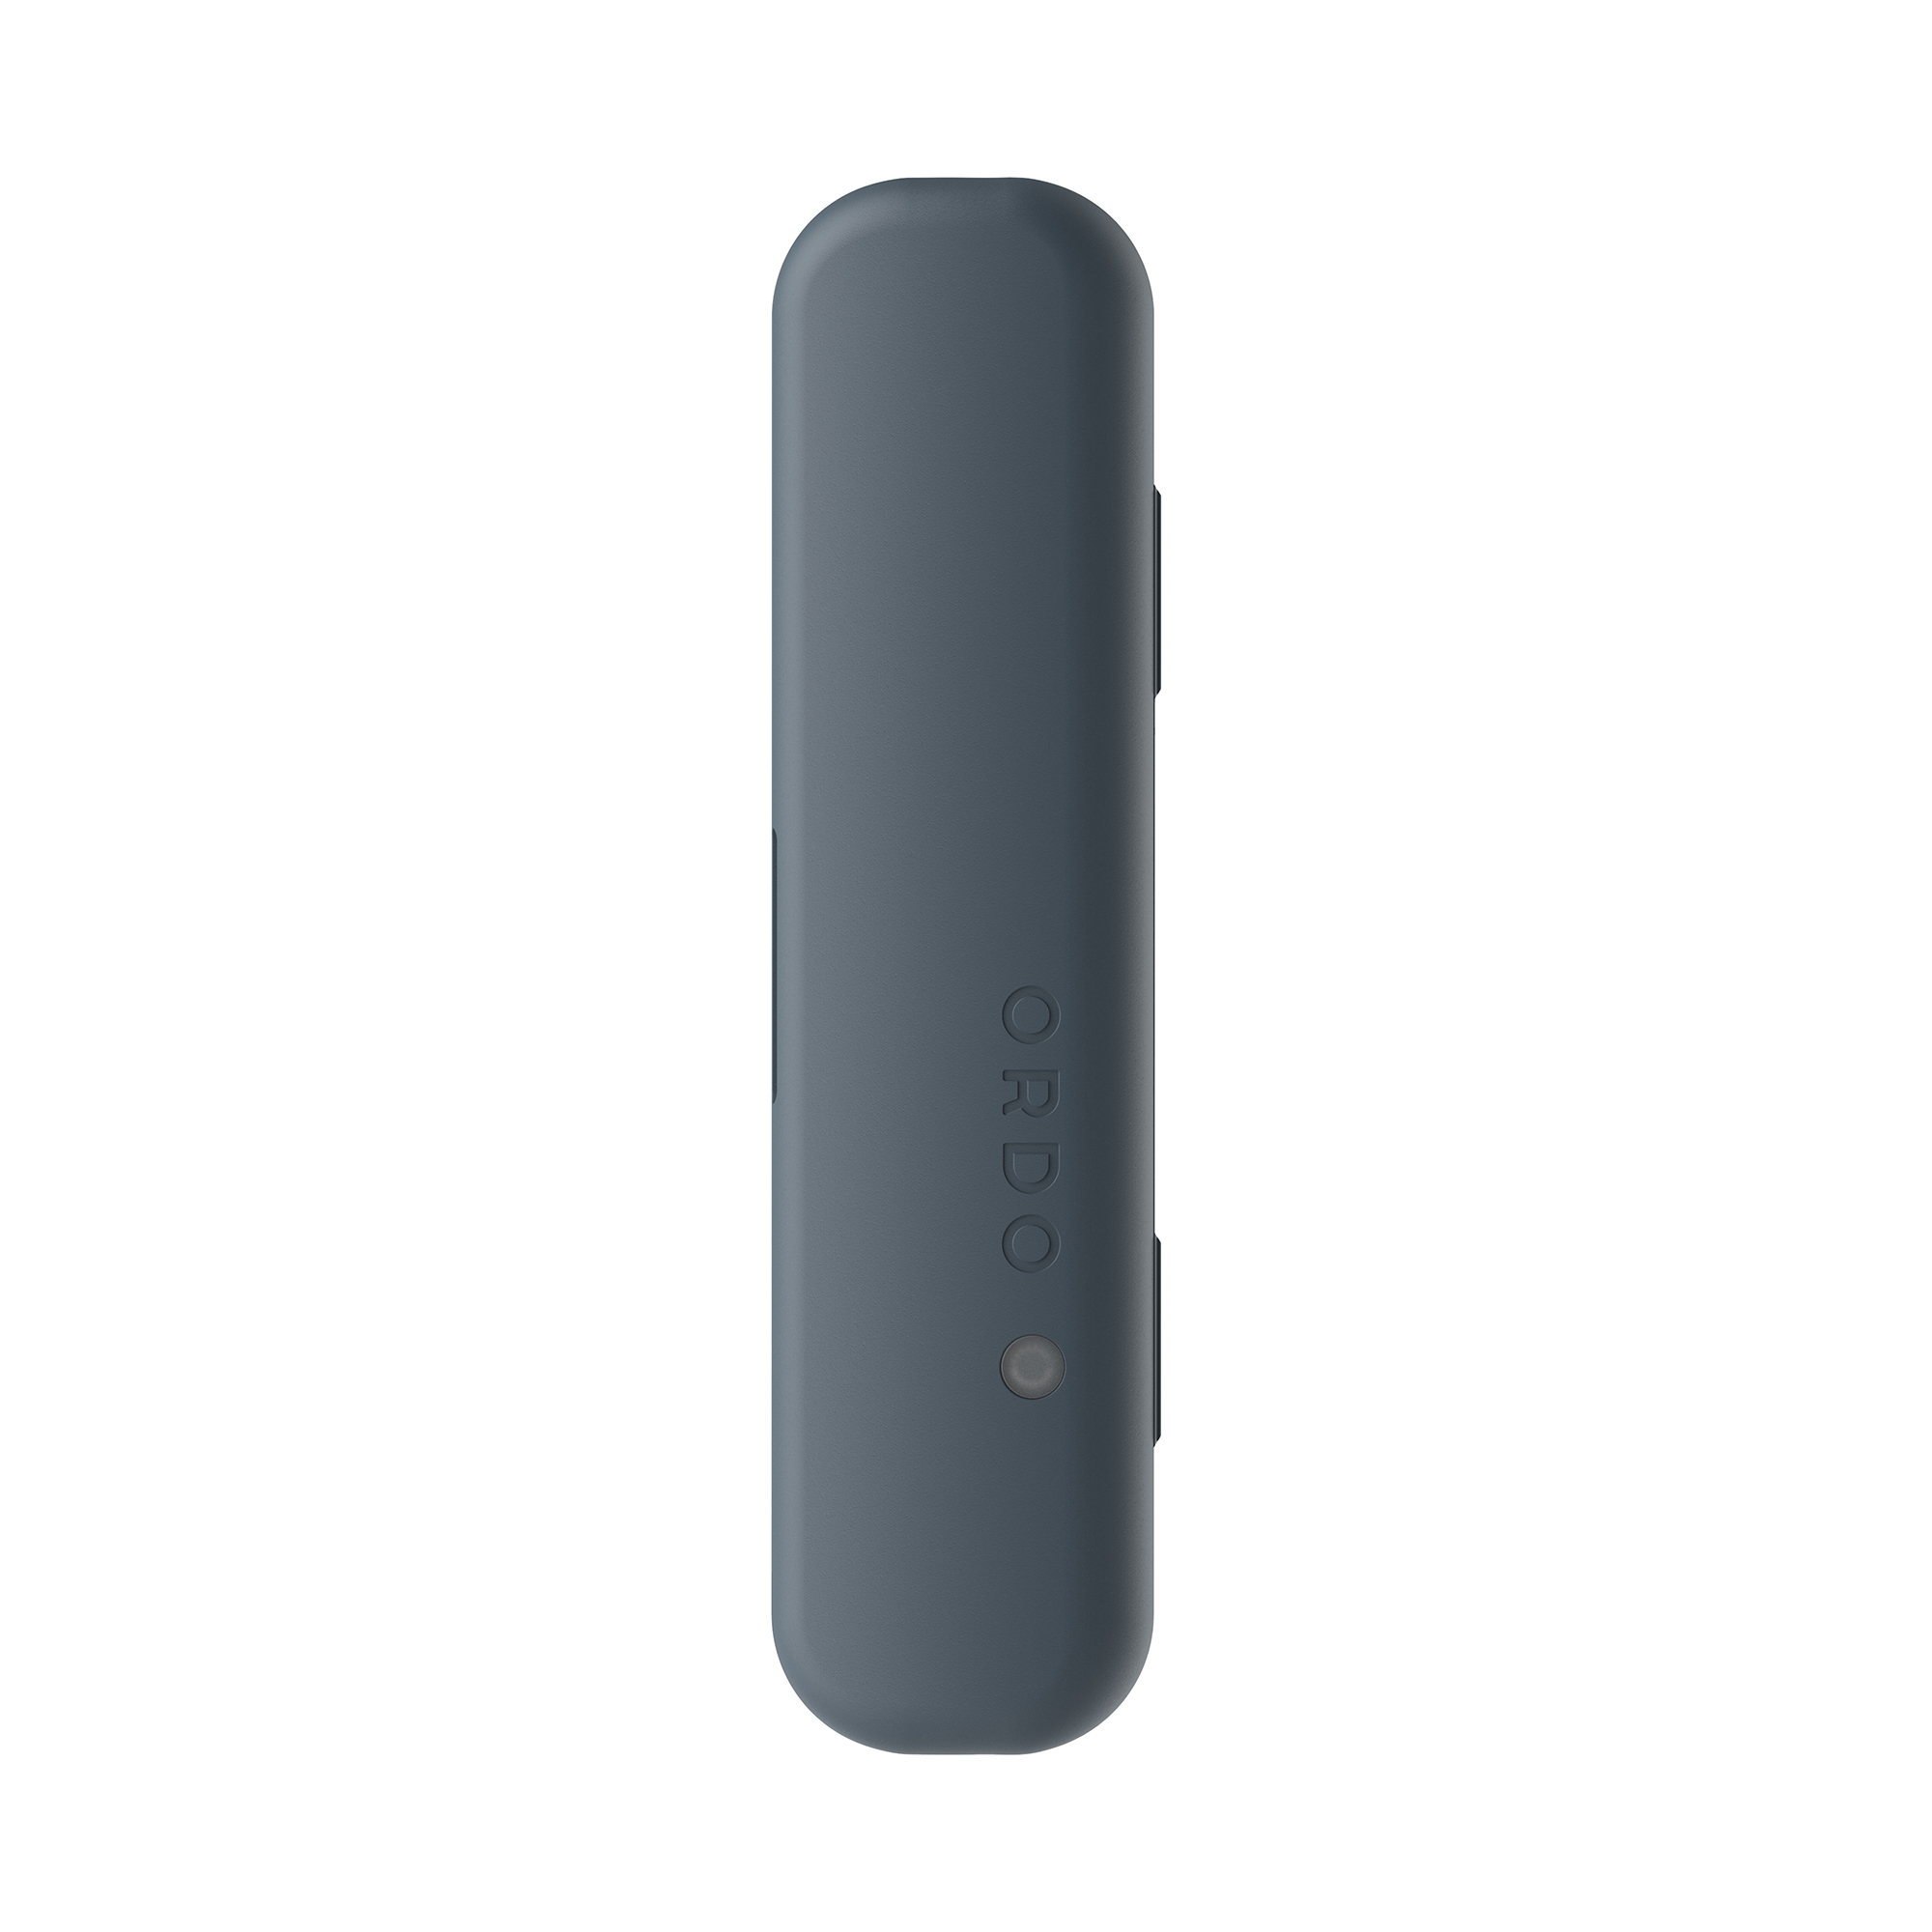 Зарядное устройство, футляр ORDO Sonic+ Charging Travel Case Charcoal Grey зарядный кейс dji charging case для pocket 2 cp os 00000129 01